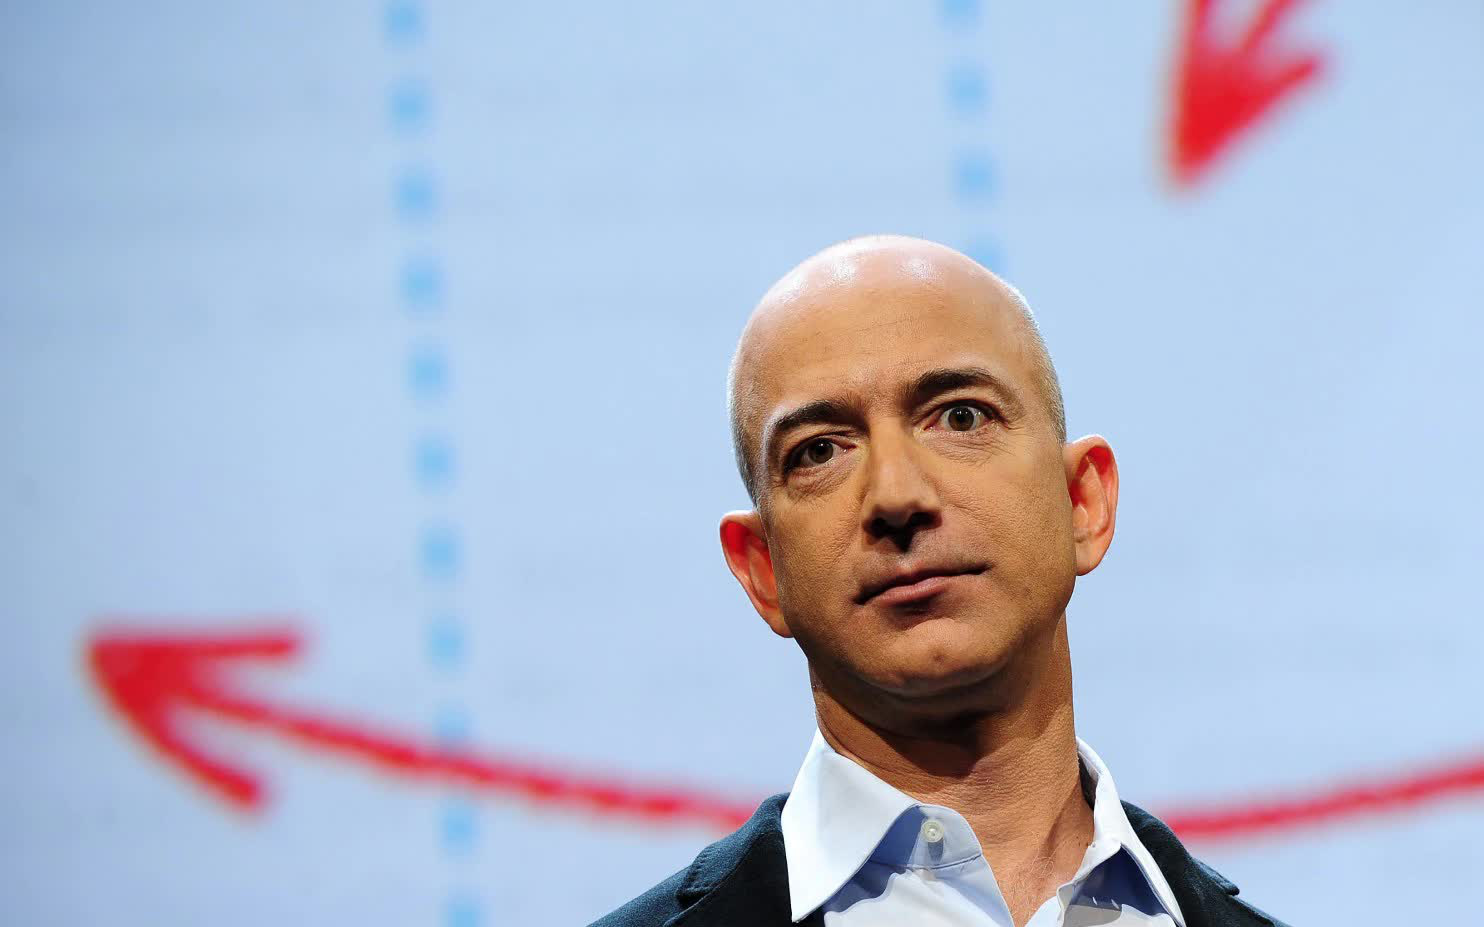 Tỷ phú Jeff Bezos, người sáng lập Amazon